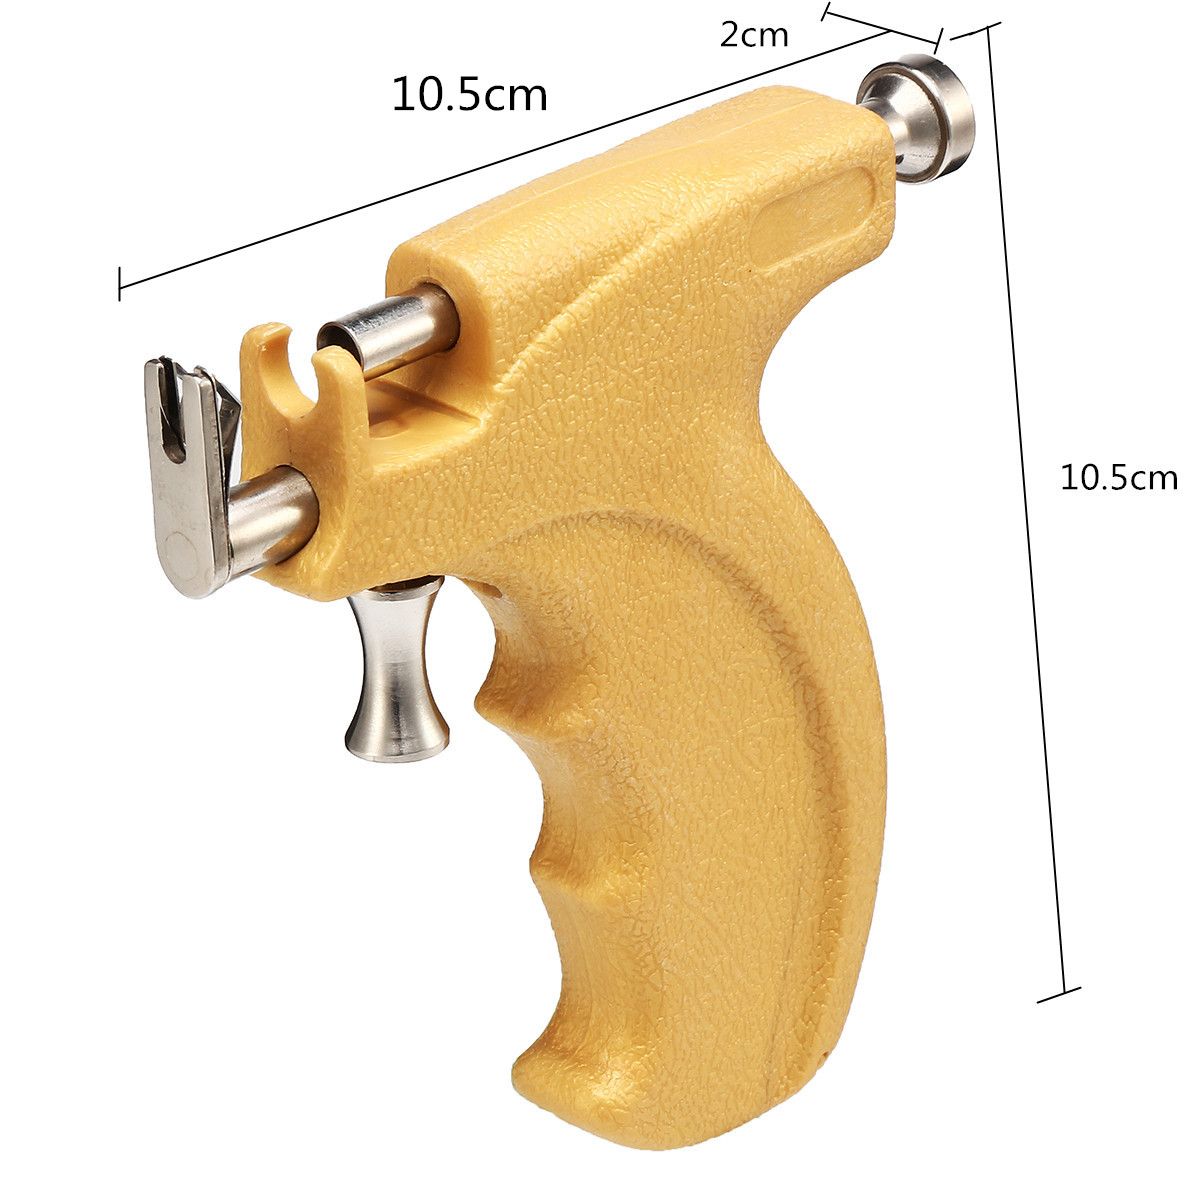 3mm4mm5mm-Ear-Piercing-Gun-Pierce-Metal-Kit-Tool-With-98-Free-Studs-1349686